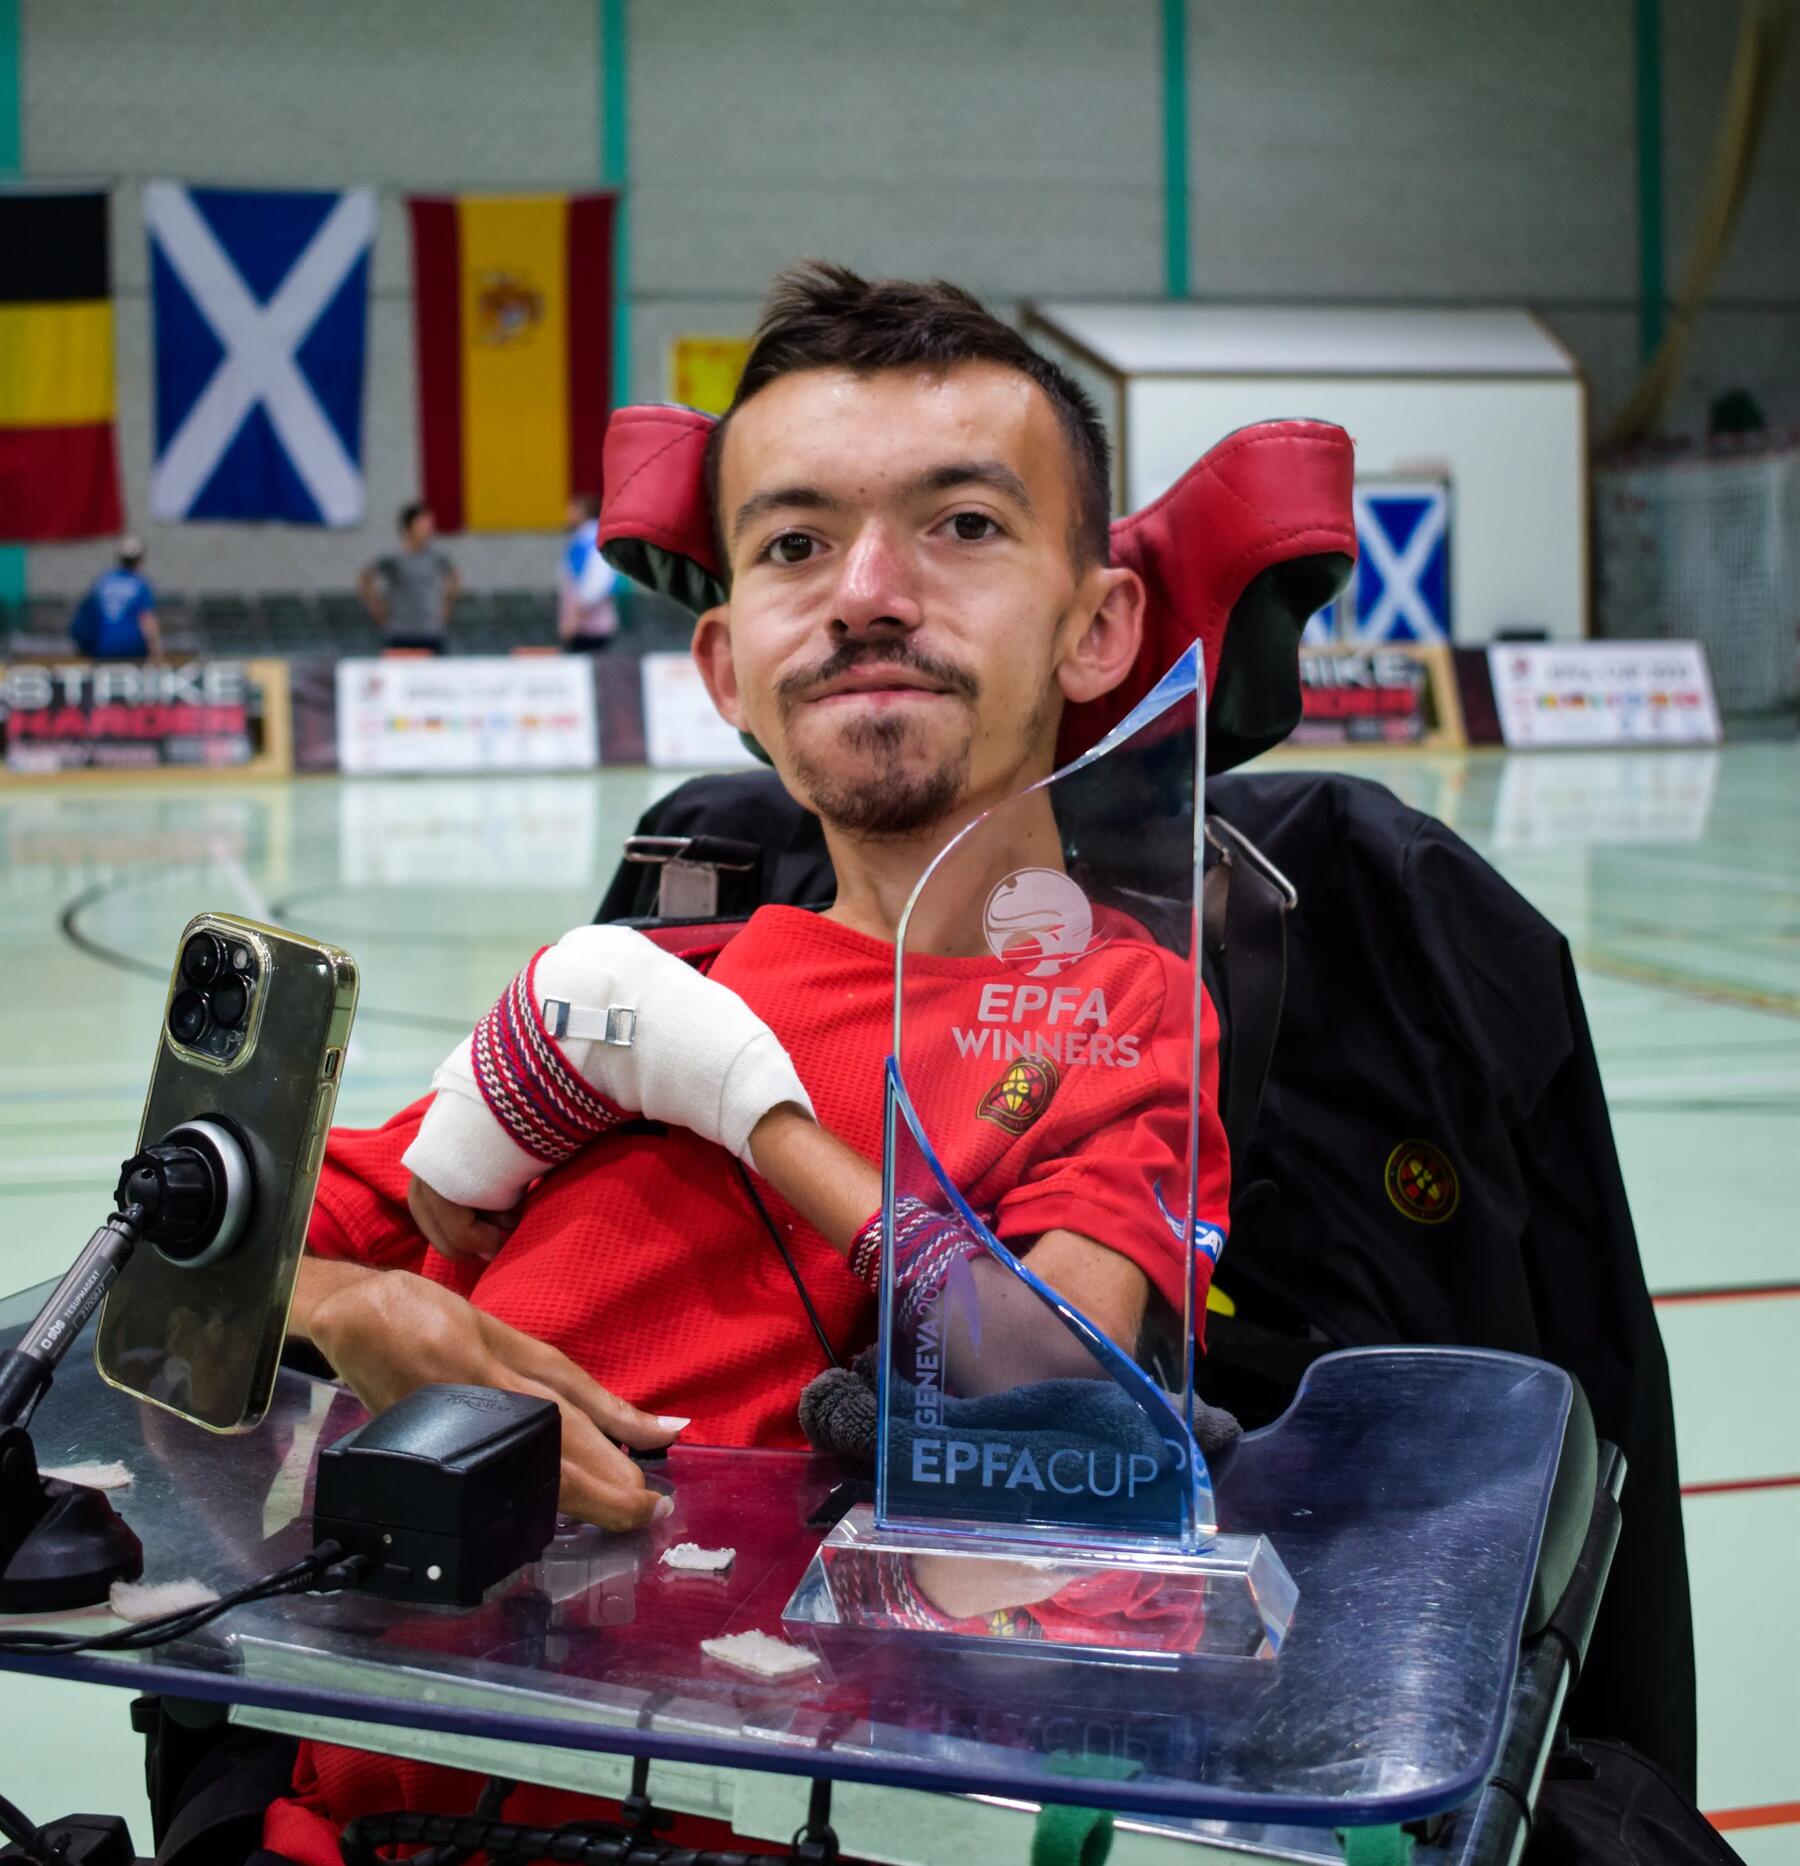 Kipsta, fier d'équiper l'équipe nationale belge de foot fauteuil 